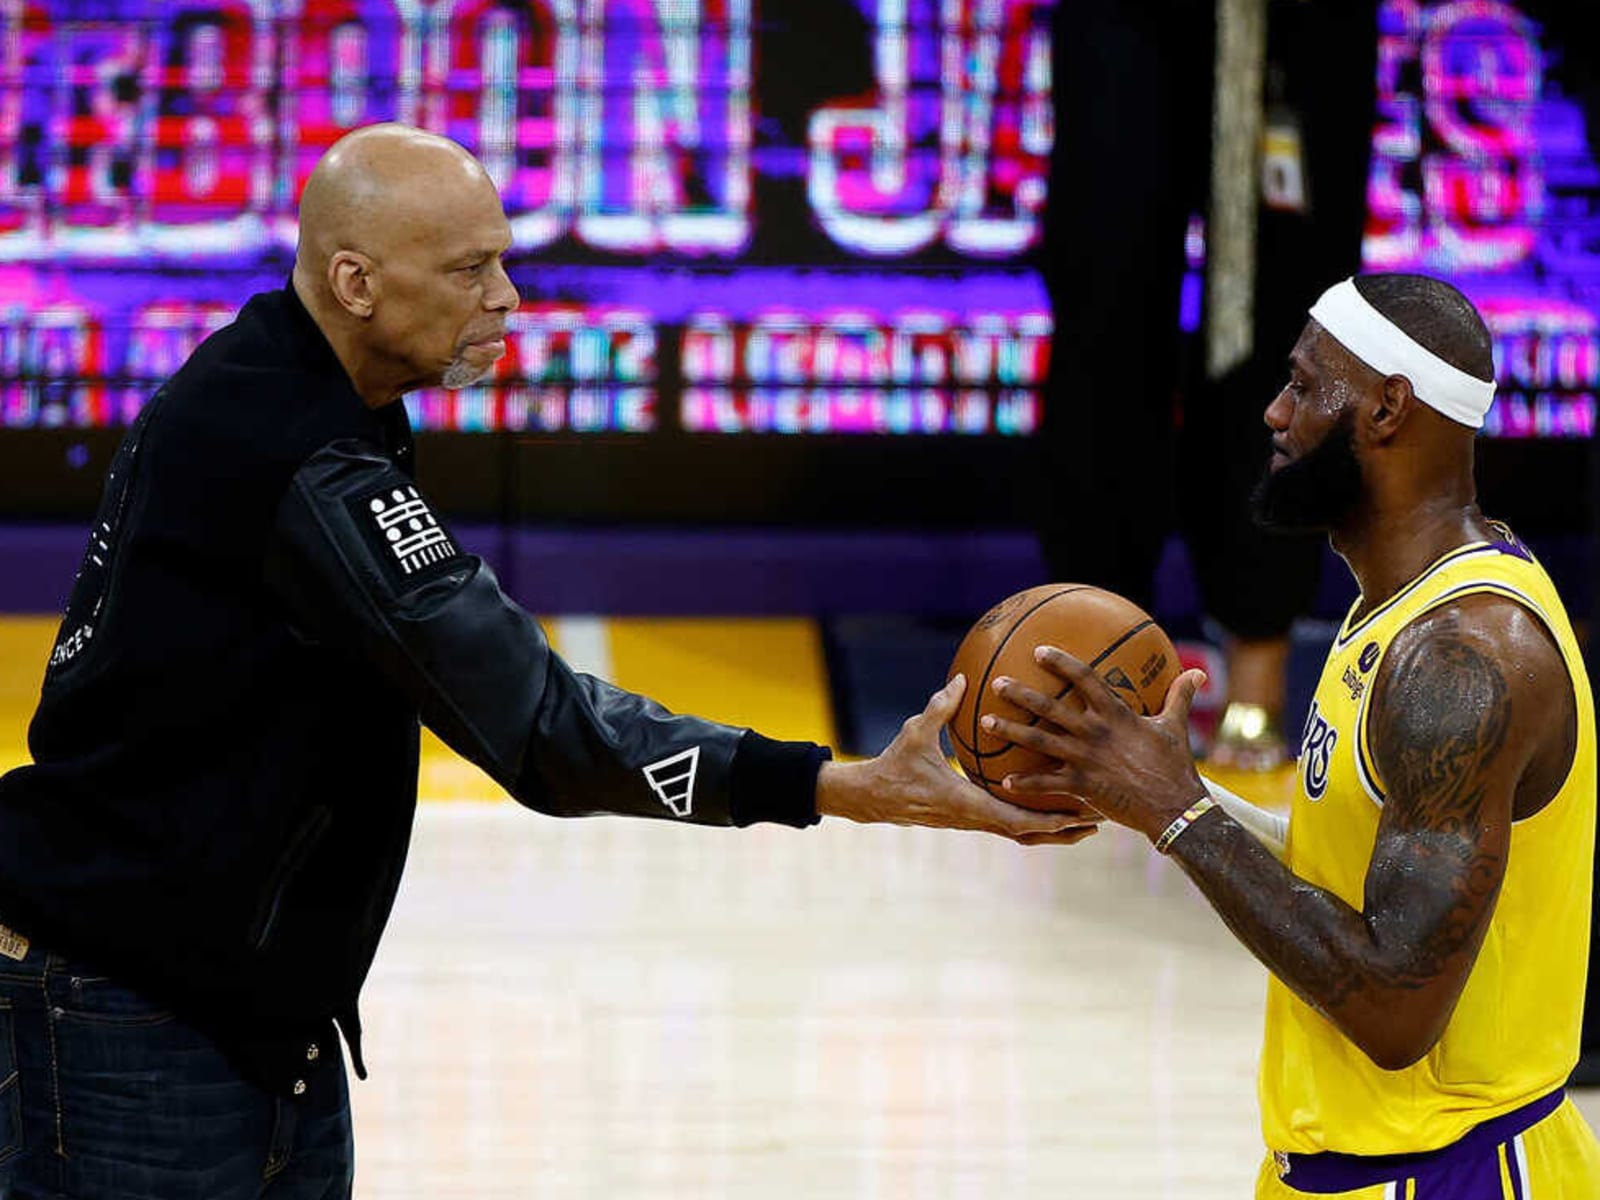 NBA Finals 2020: LeBron James returns Los Angeles Lakers to glory with MVP  performance, NBA News